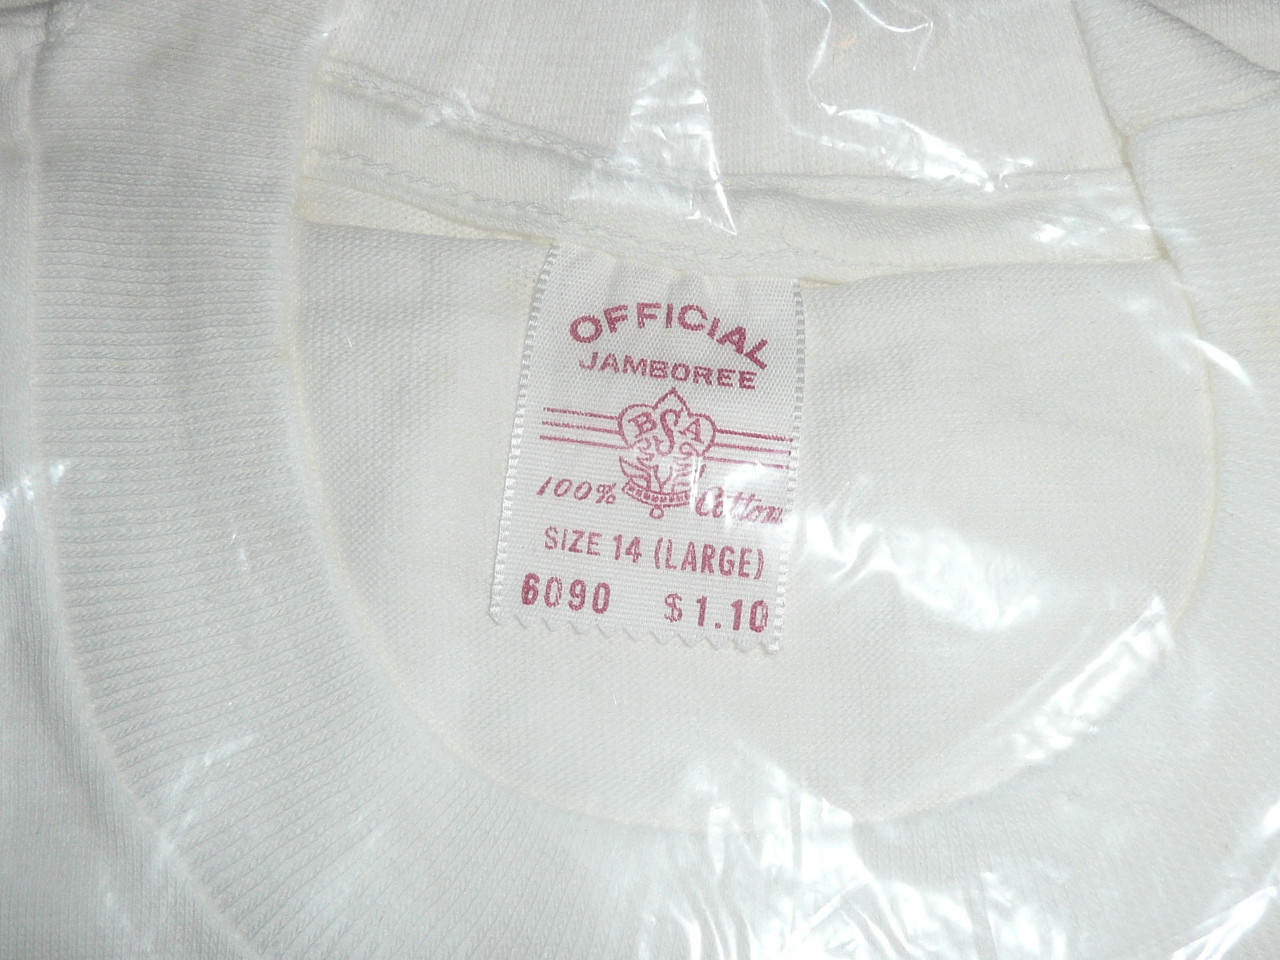 1960 National Jamboree Tee Shirt, Youth Large, New in Bag